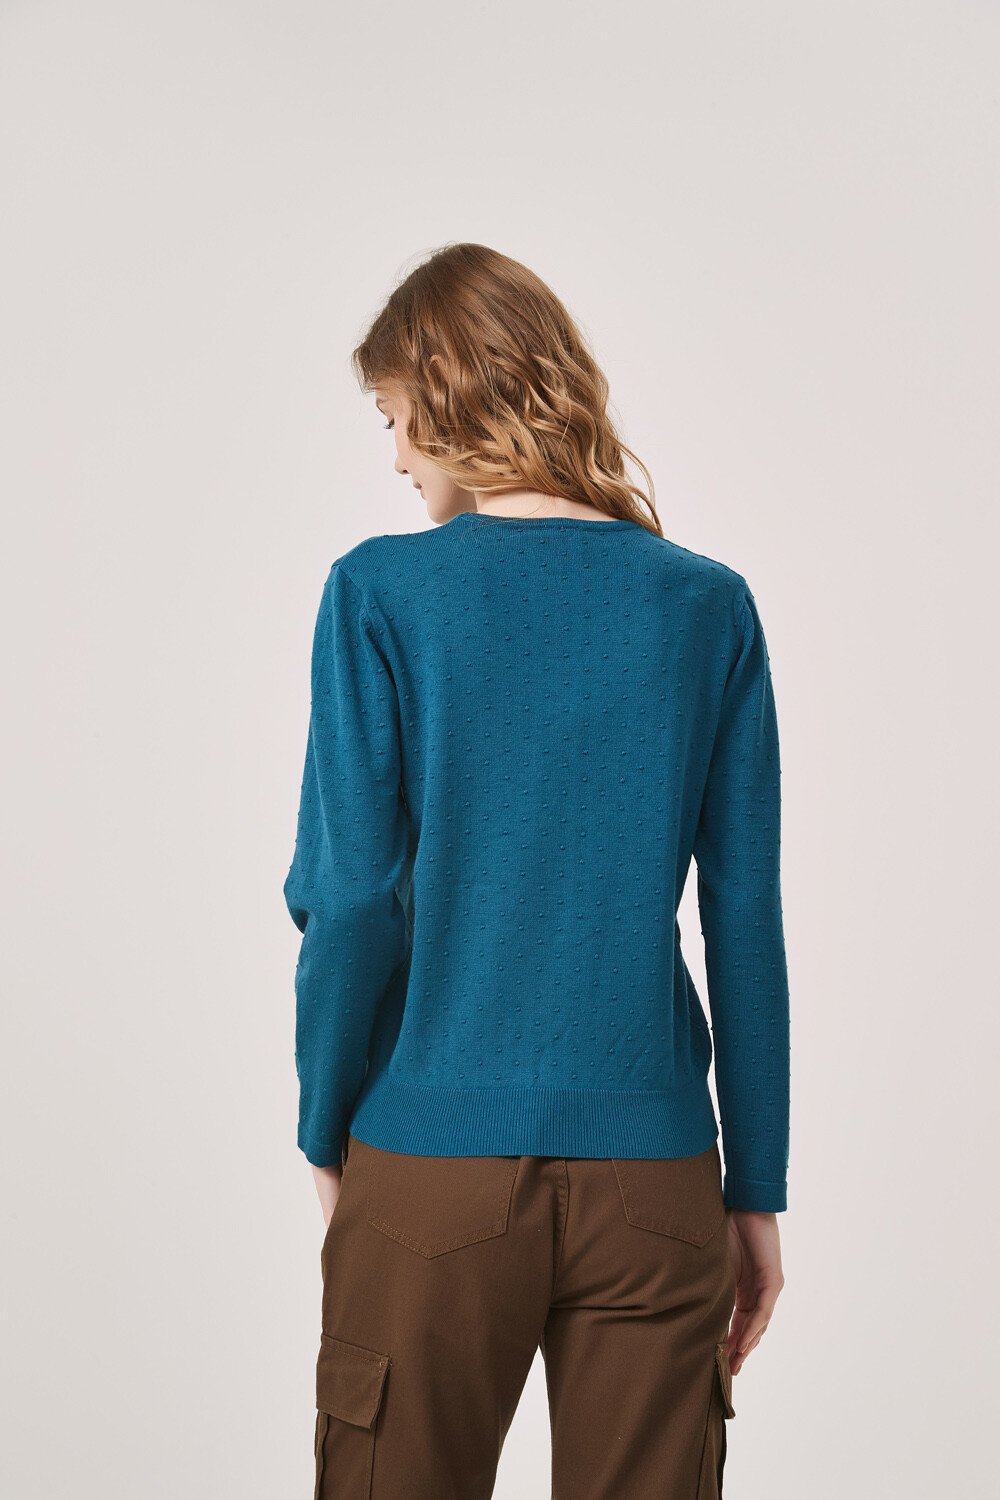 Sweater Misurata Azul Grisaceo